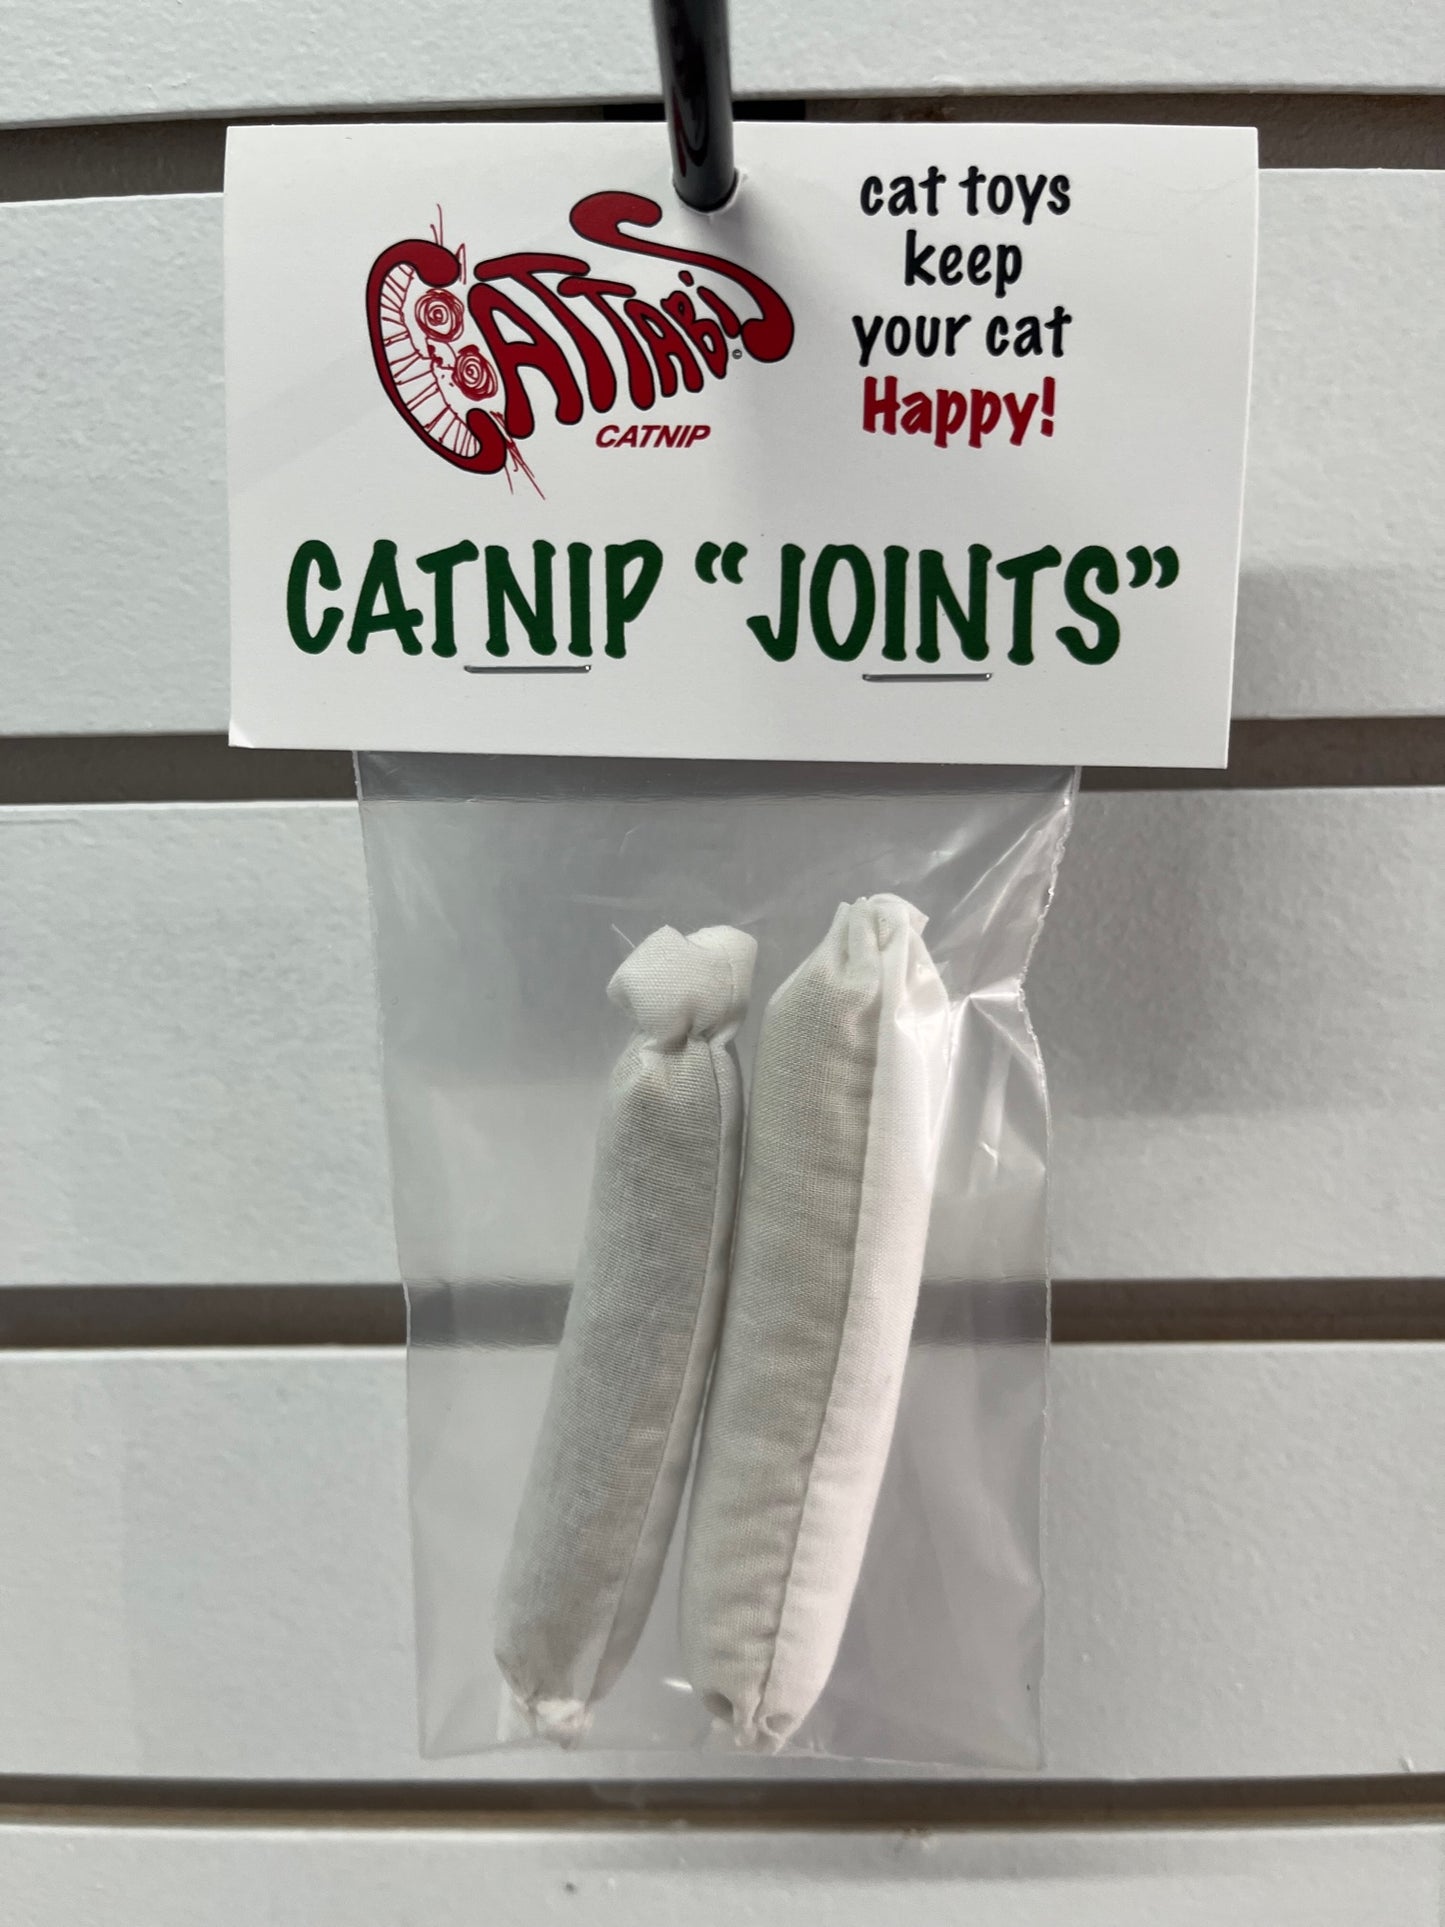 Catnip "Joints"